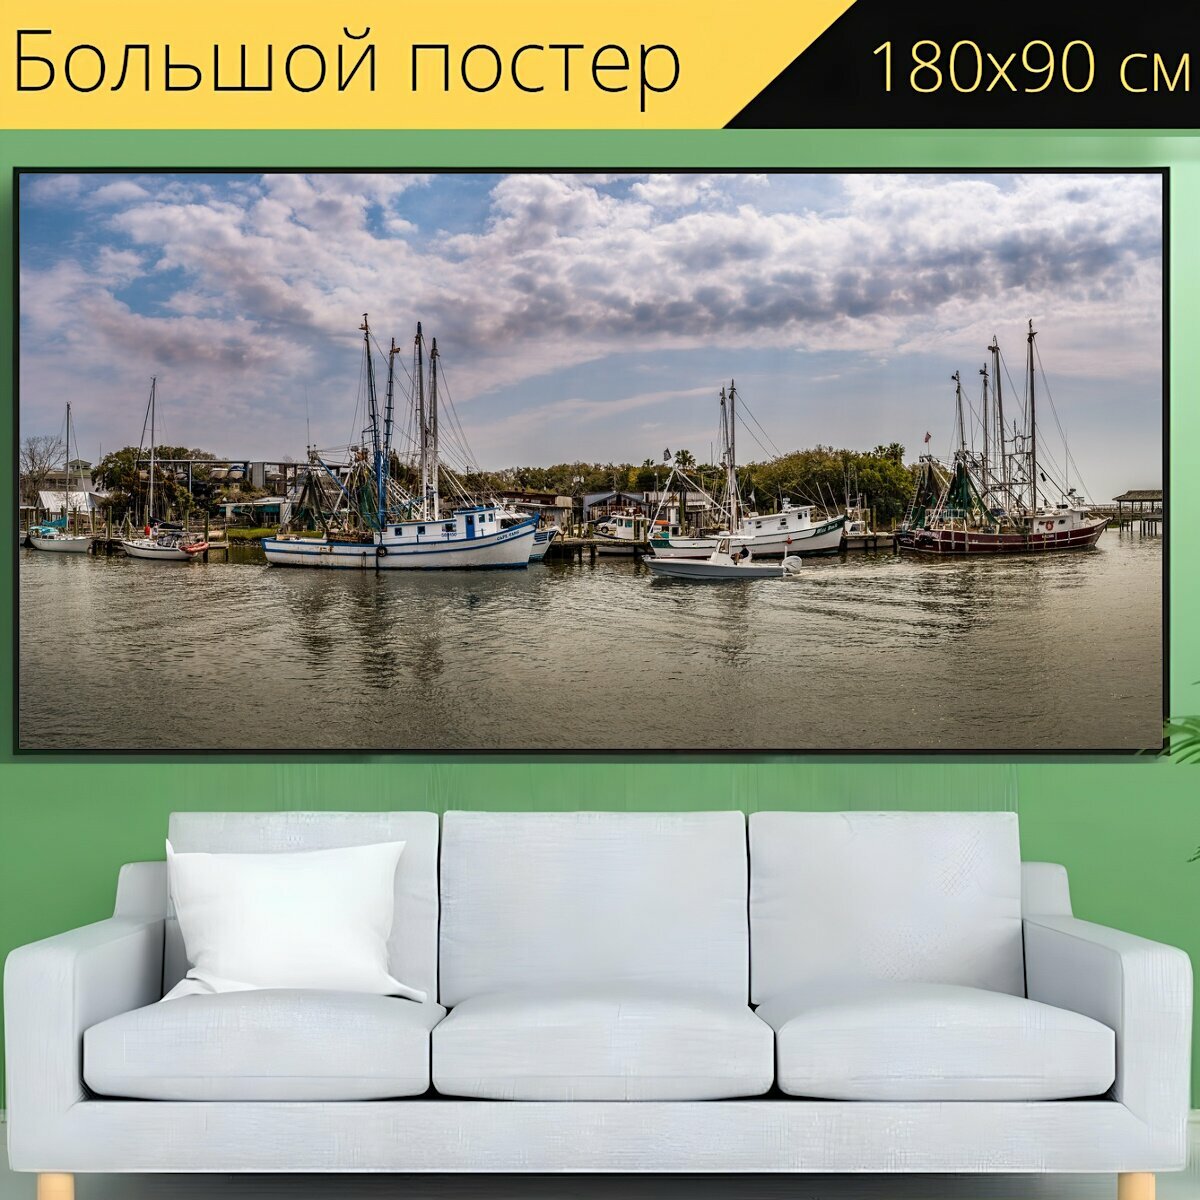 Большой постер "Лодки креветок, гавань, залив" 180 x 90 см. для интерьера